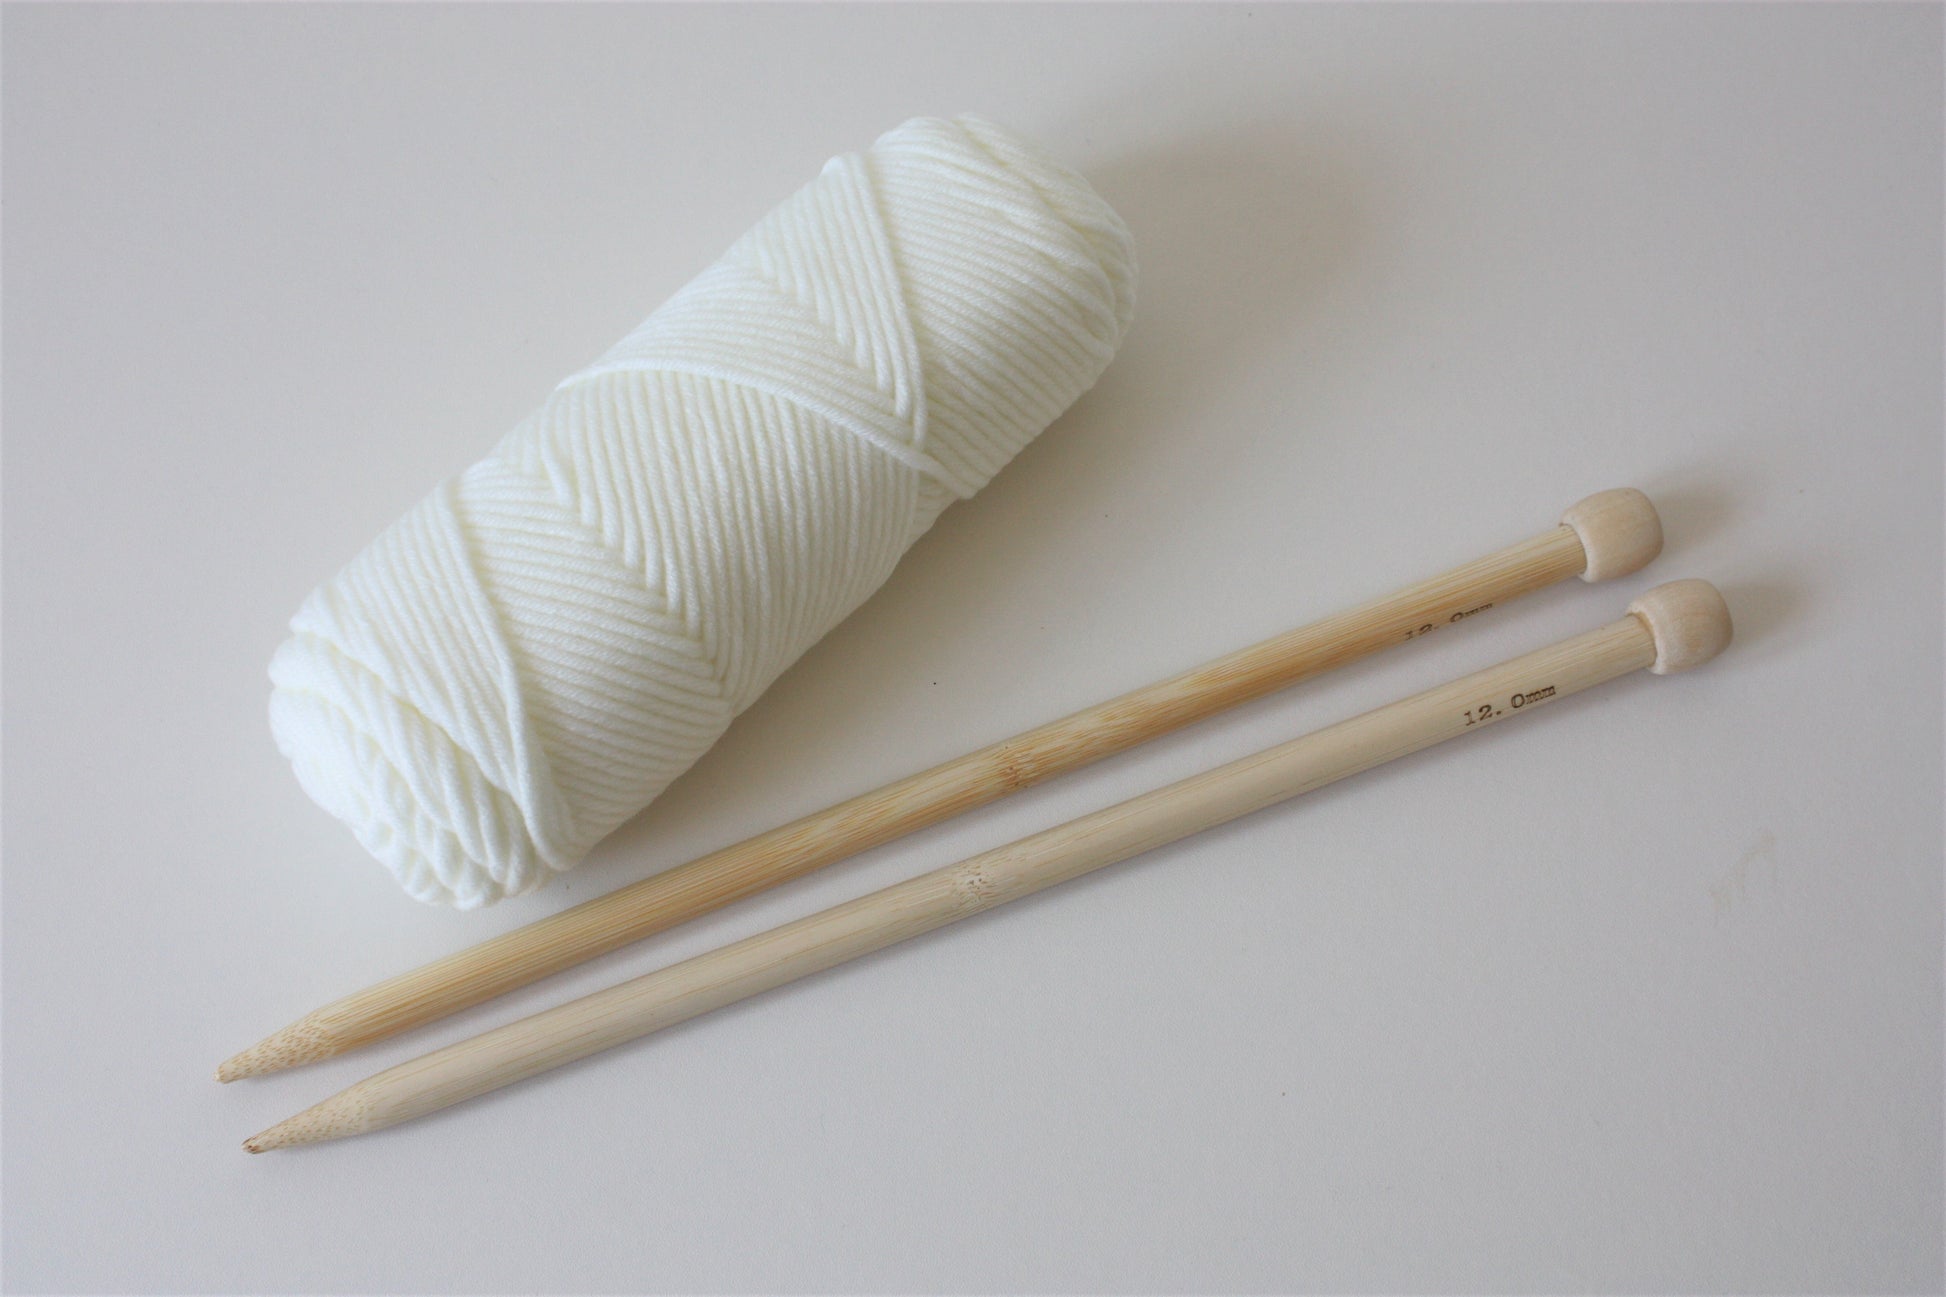 US size 17 (12mm) Circular Knitting Needles